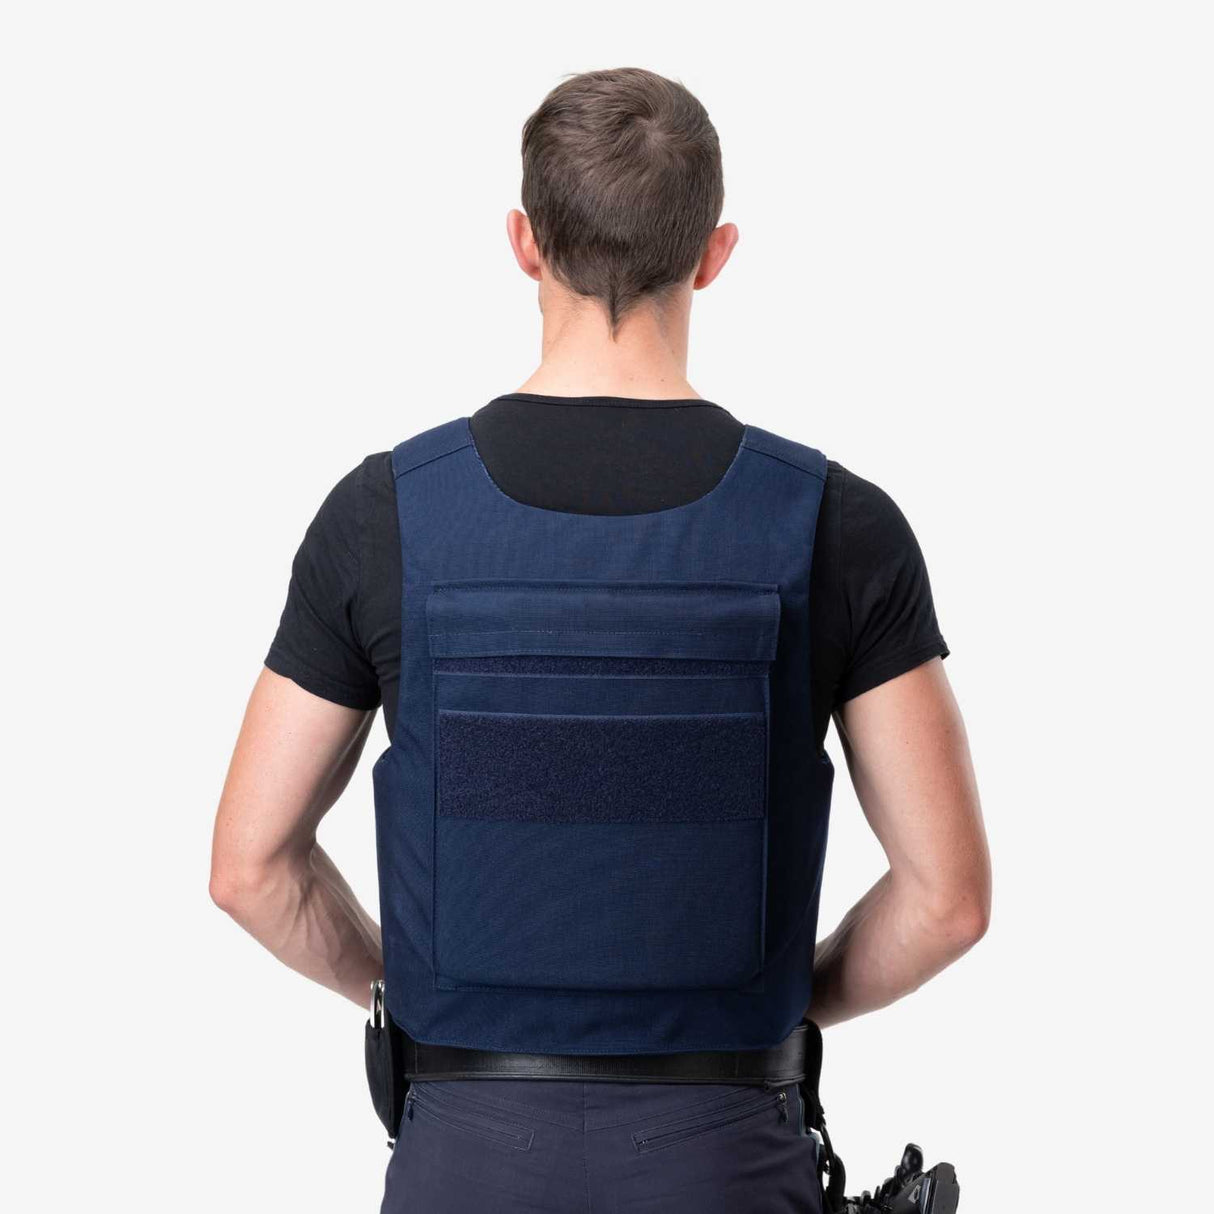 DELTA Enforcement SK1 to SK4 tactical vest